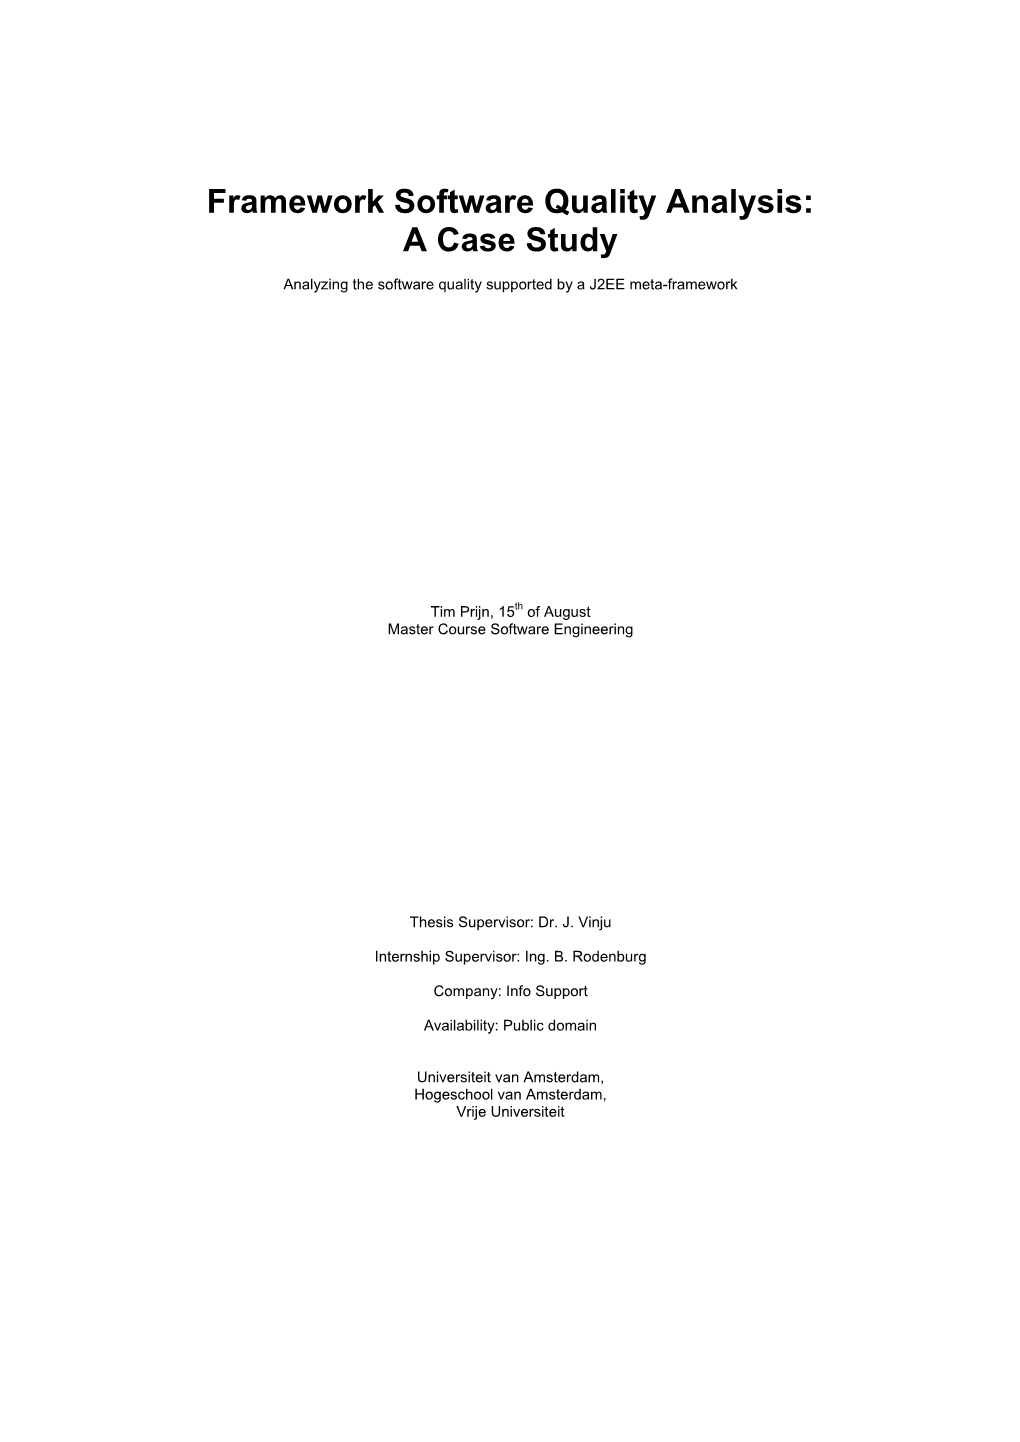 Framework Software Quality Analysis: a Case Study